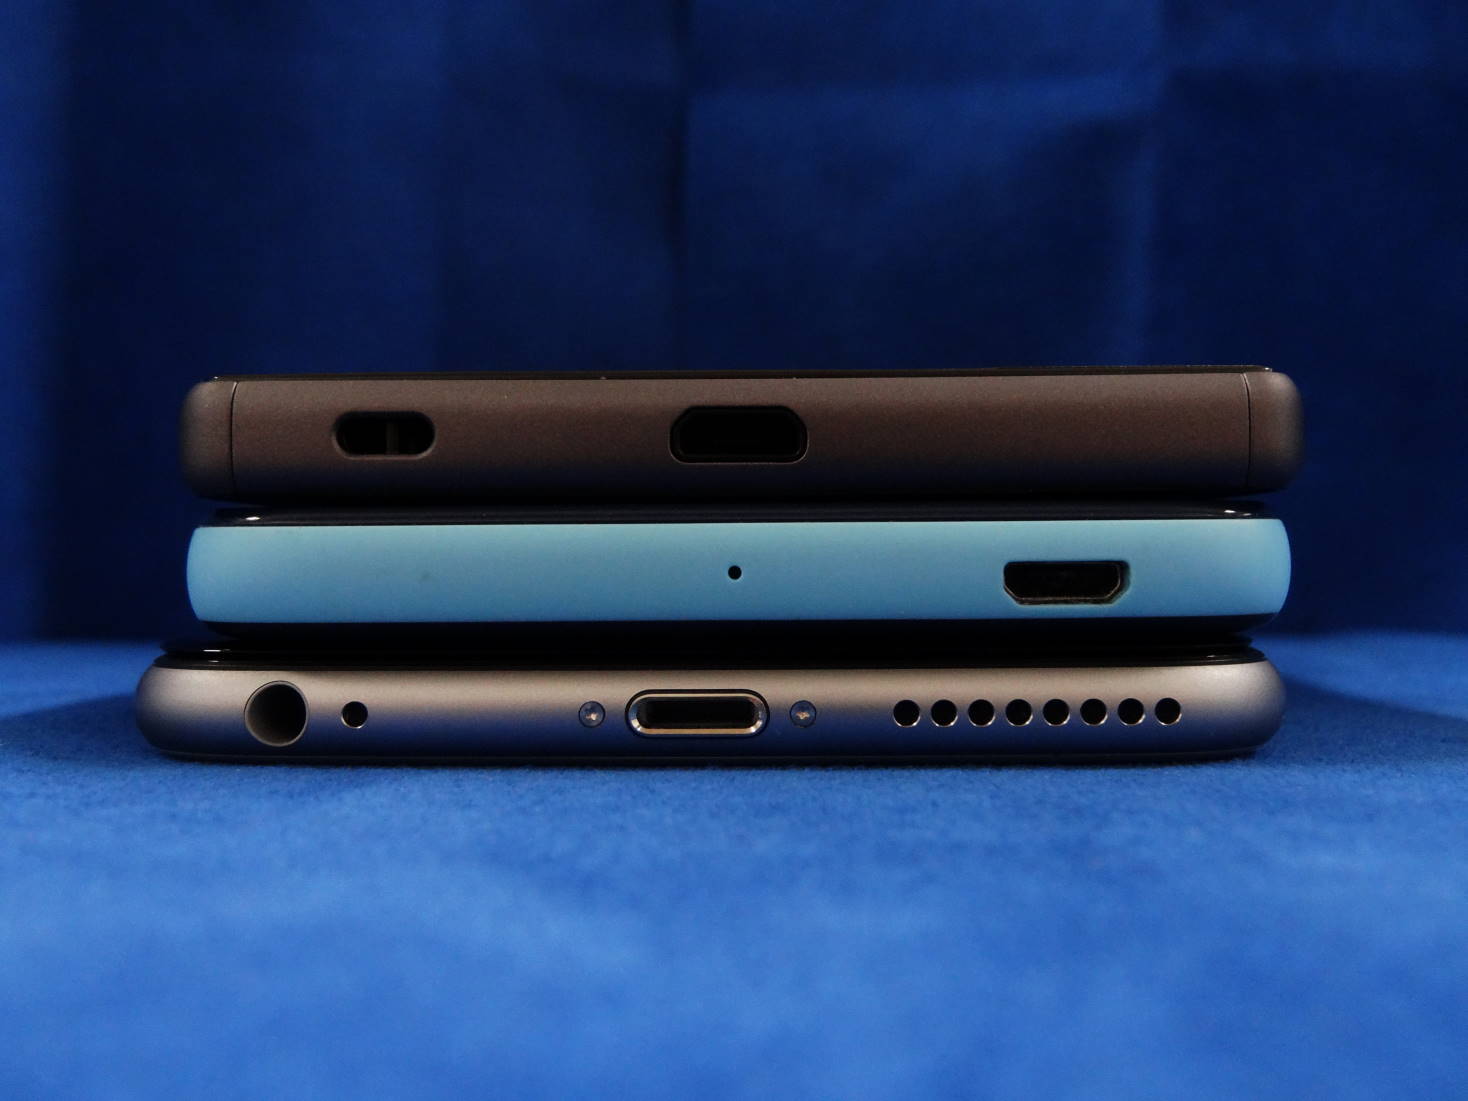 Xperia Z5 と HTC Desire EYE  と iPhone 6 Plus の横幅比較